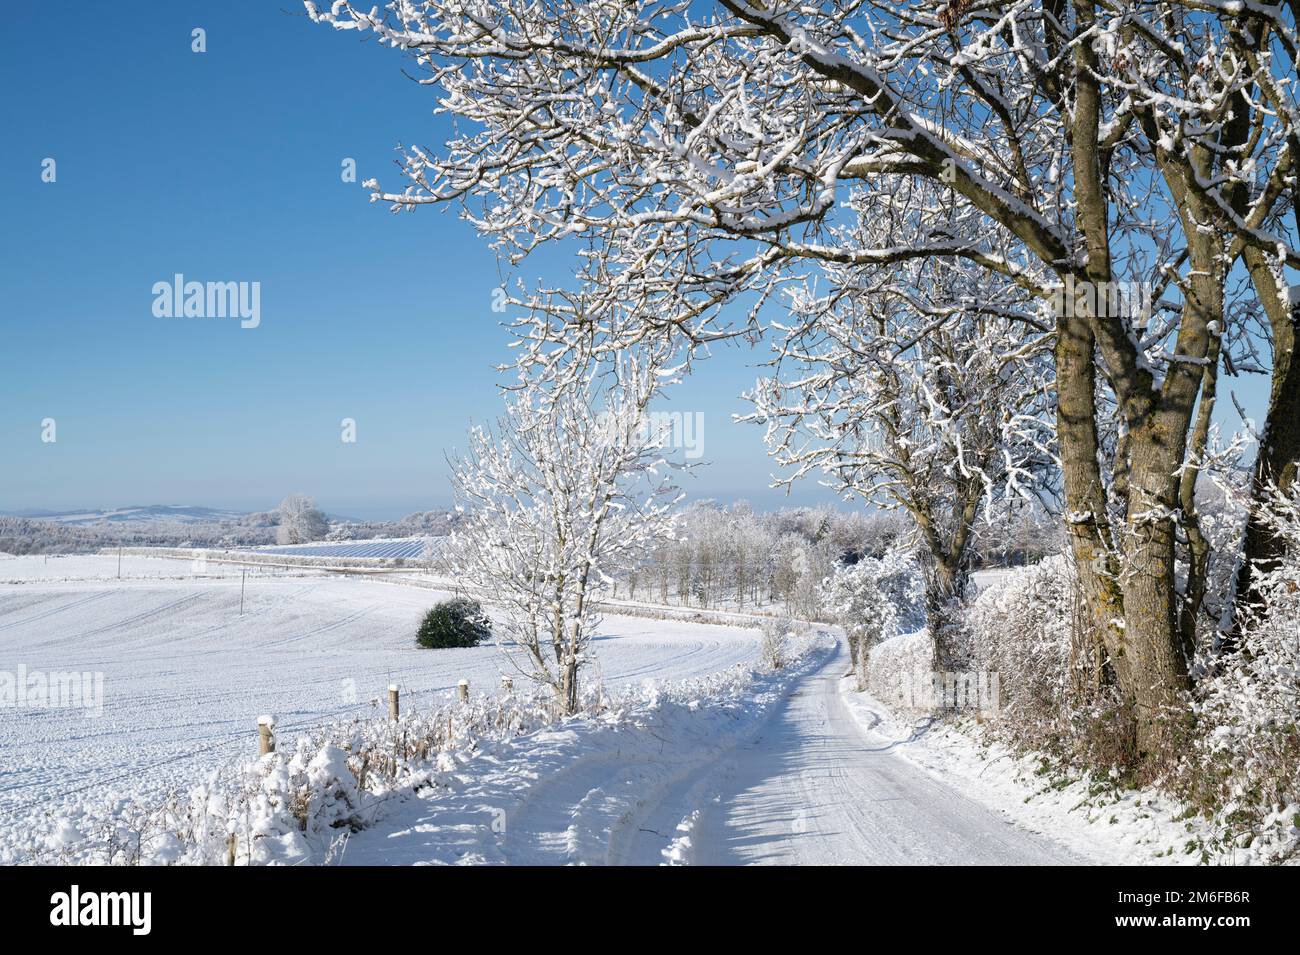 Carretera rural cubierta de nieve en la nieve de diciembre. Snowshill, Cotswolds, Gloucestershire, Inglaterra Foto de stock